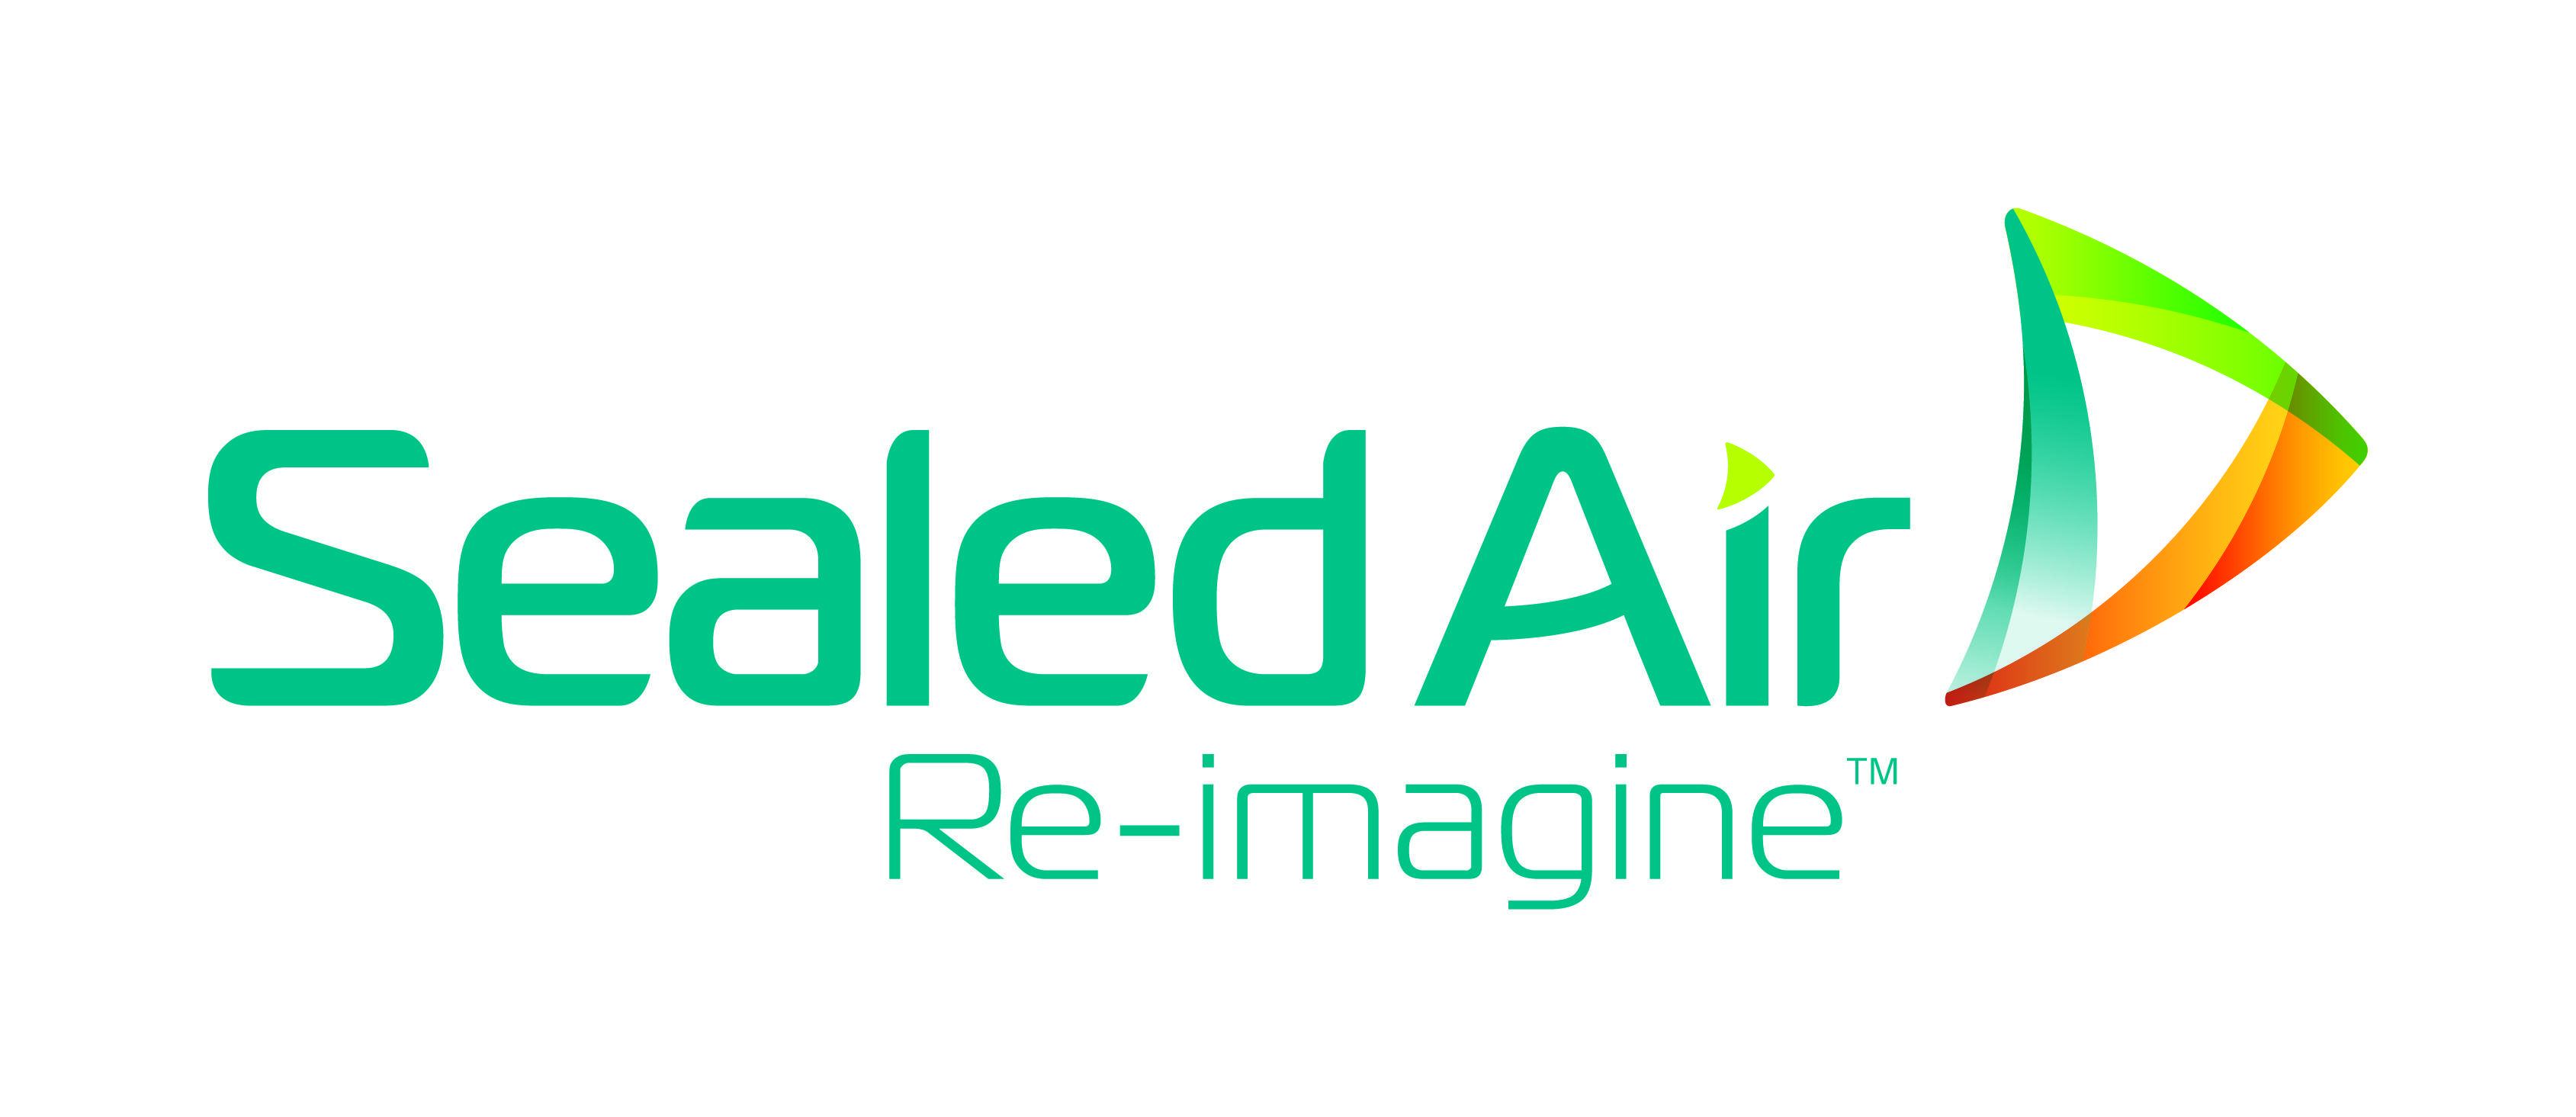 Sealed Air Logo - Sealed air Logos